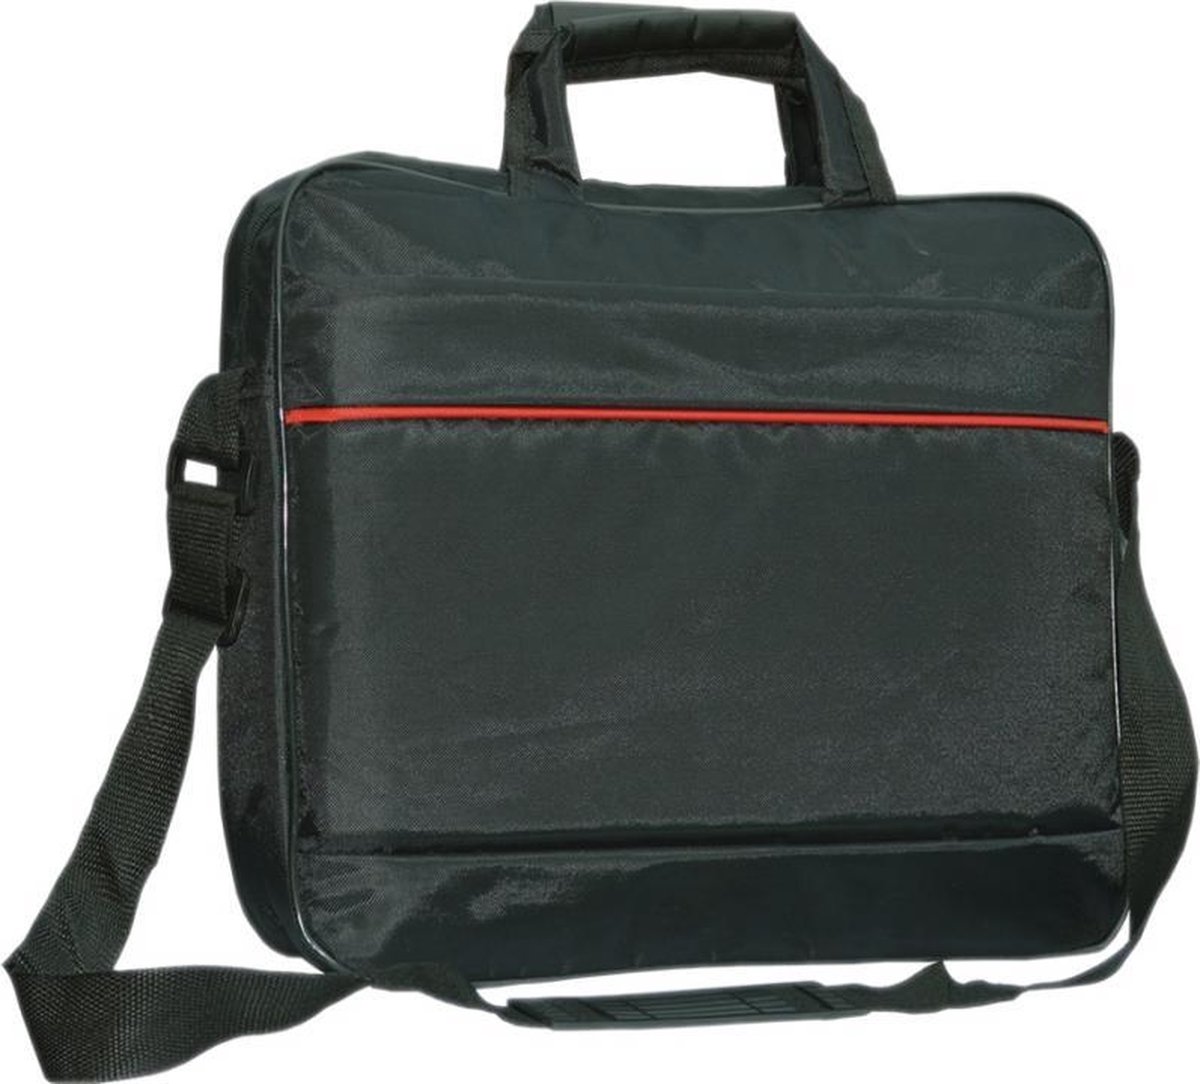 Medion Akoya S4216 laptoptas messenger bag / schoudertas / tas , zwart , merk i12Cover